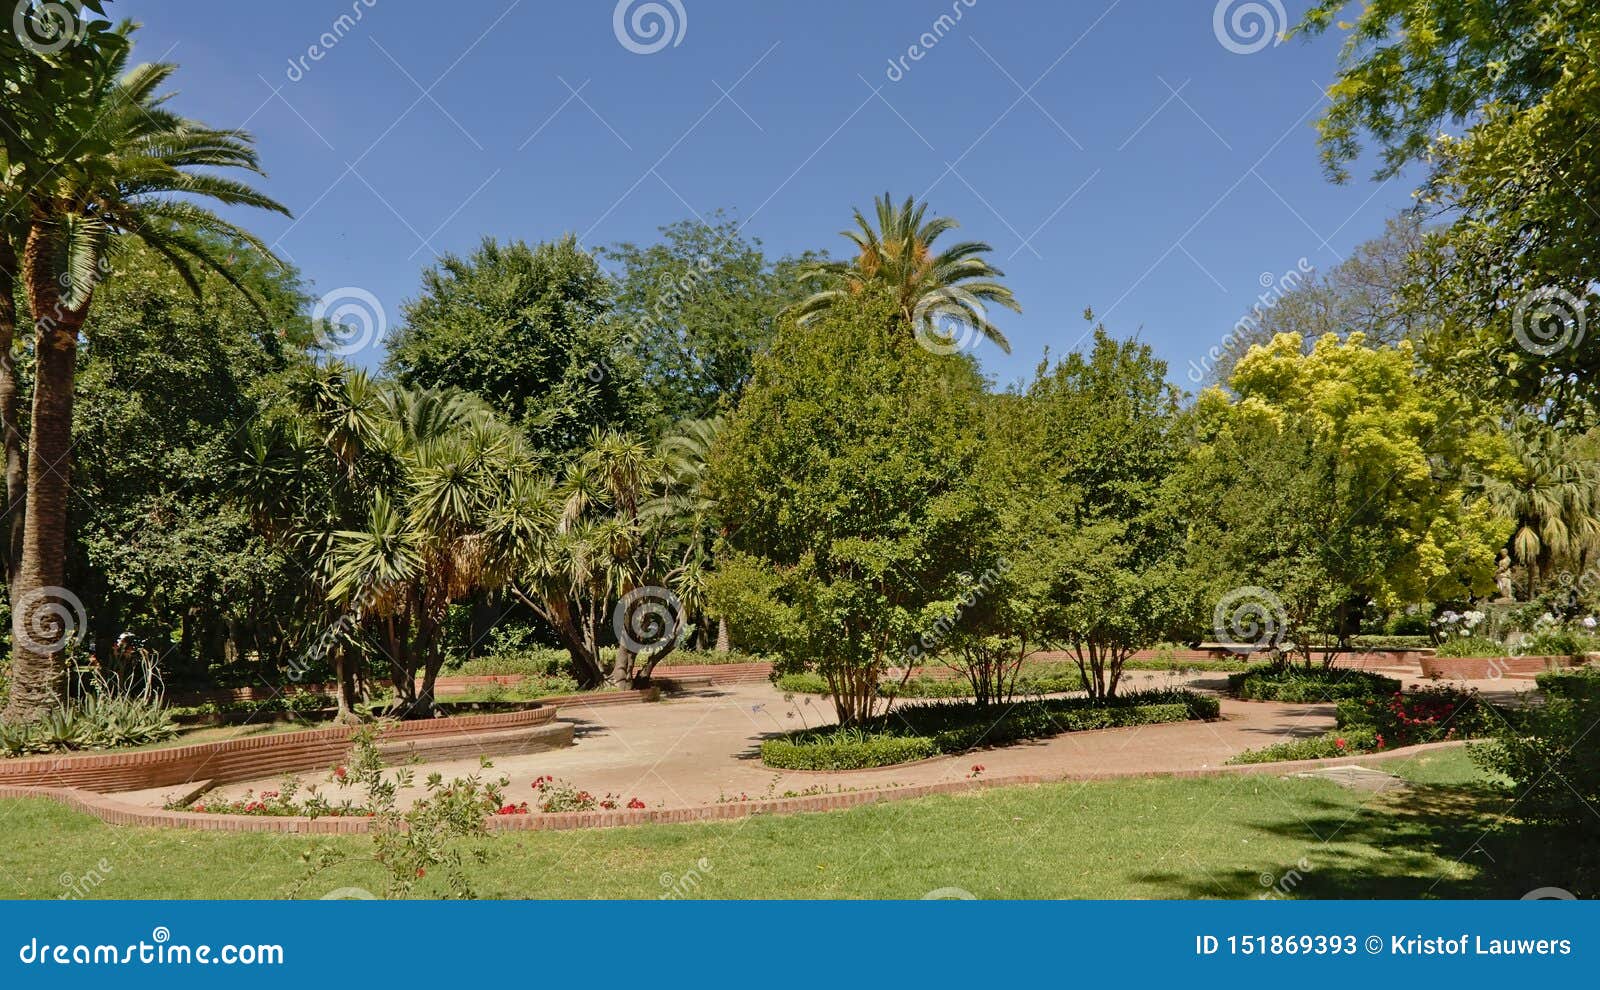 parque de maria luisa, park in seville, spain